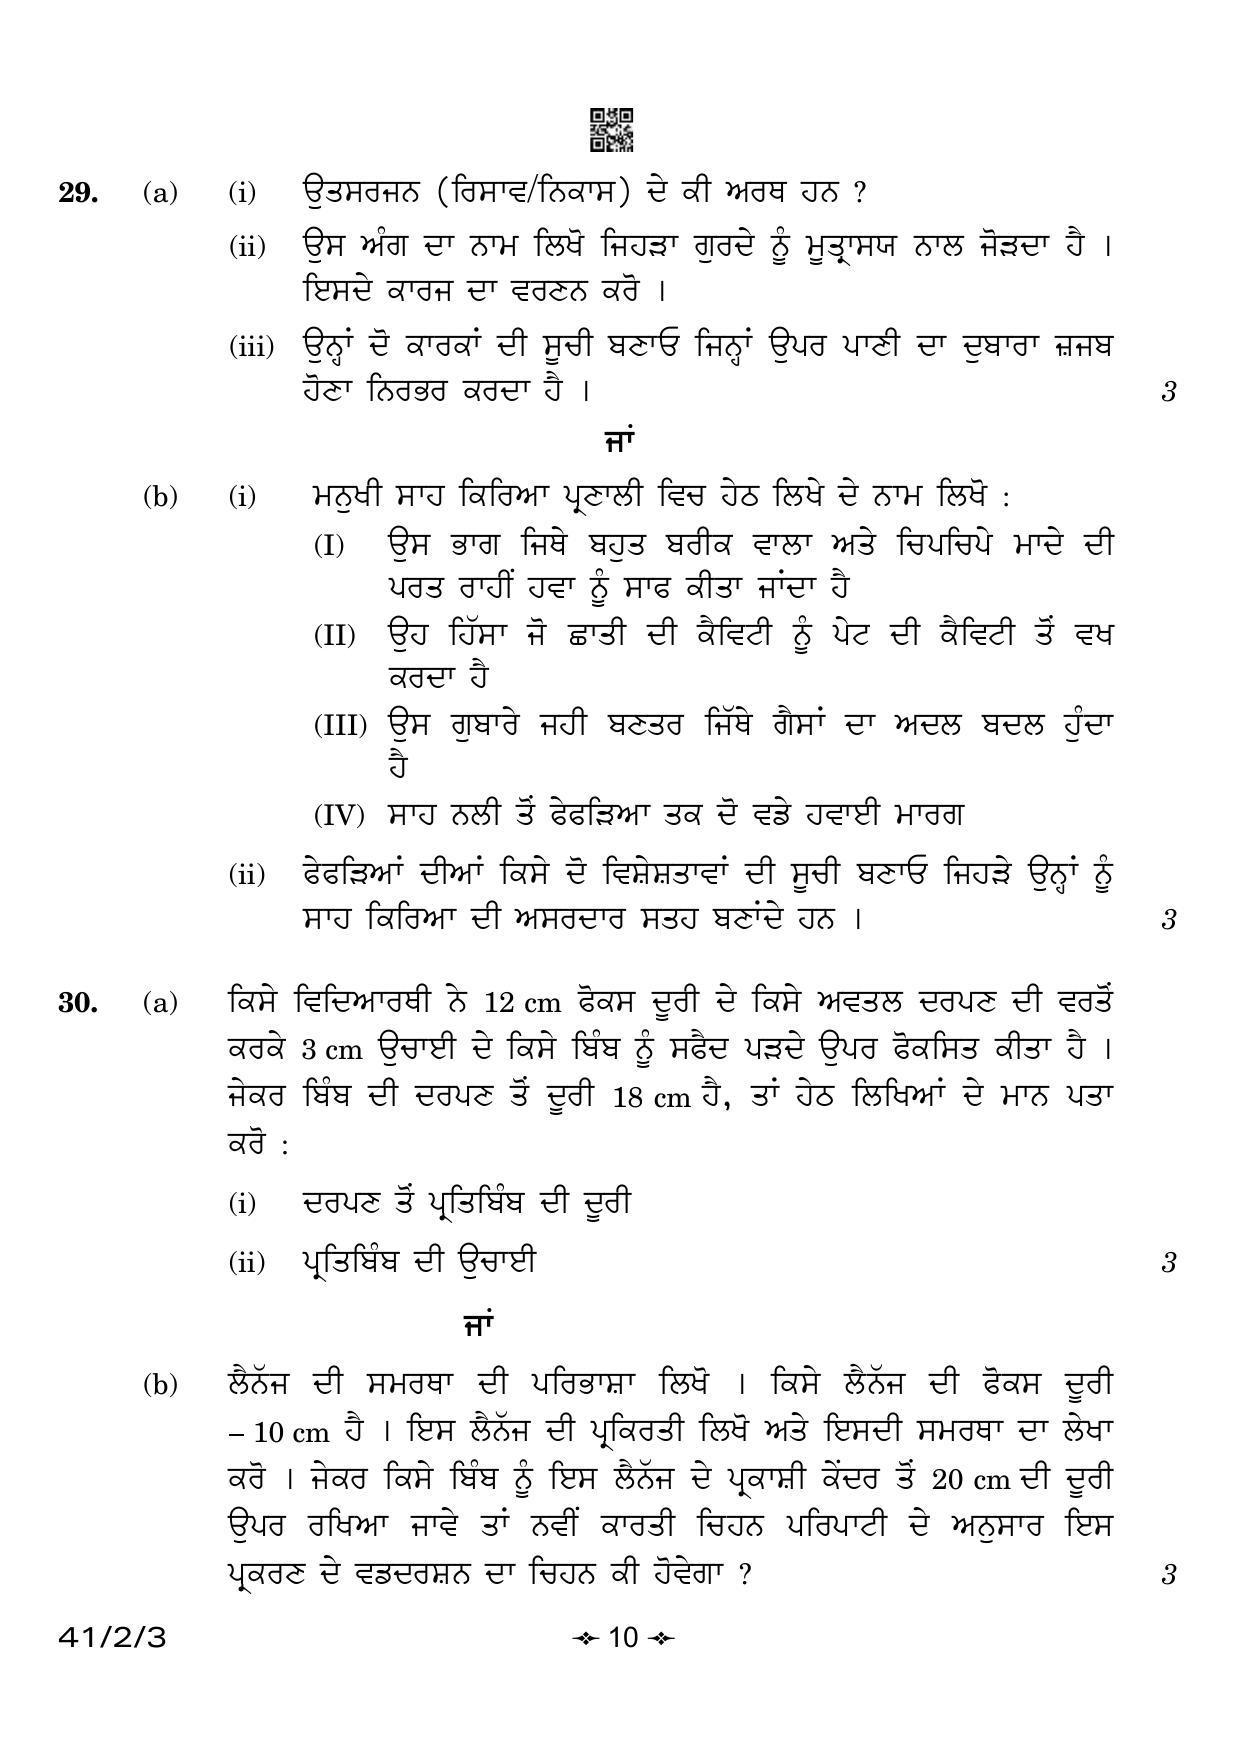 CBSE Class 10 41-2-3 Science Punjabi Version 2023 Question Paper - Page 10